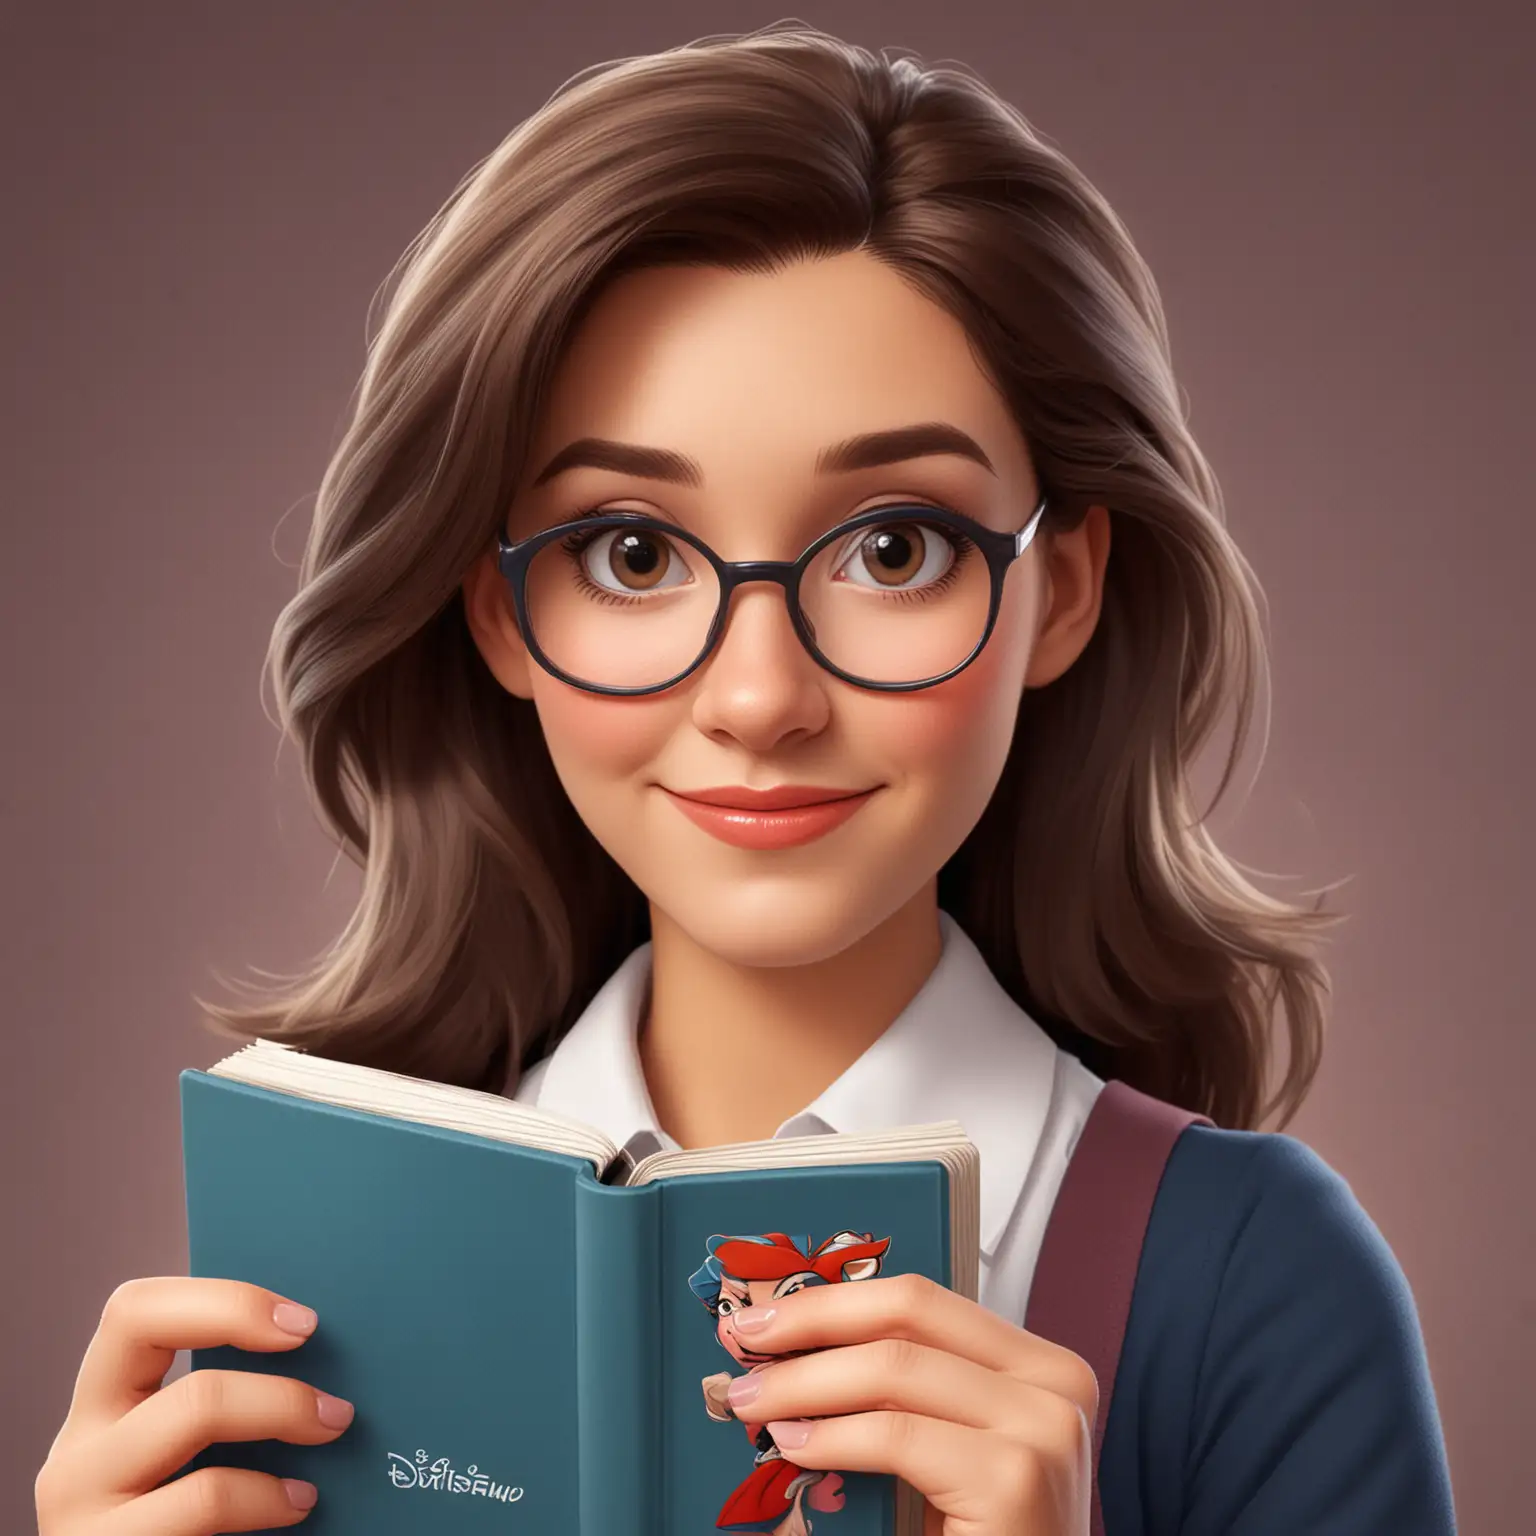 app icon, Disney character style, female teacher, cute, headshot, holding an English book